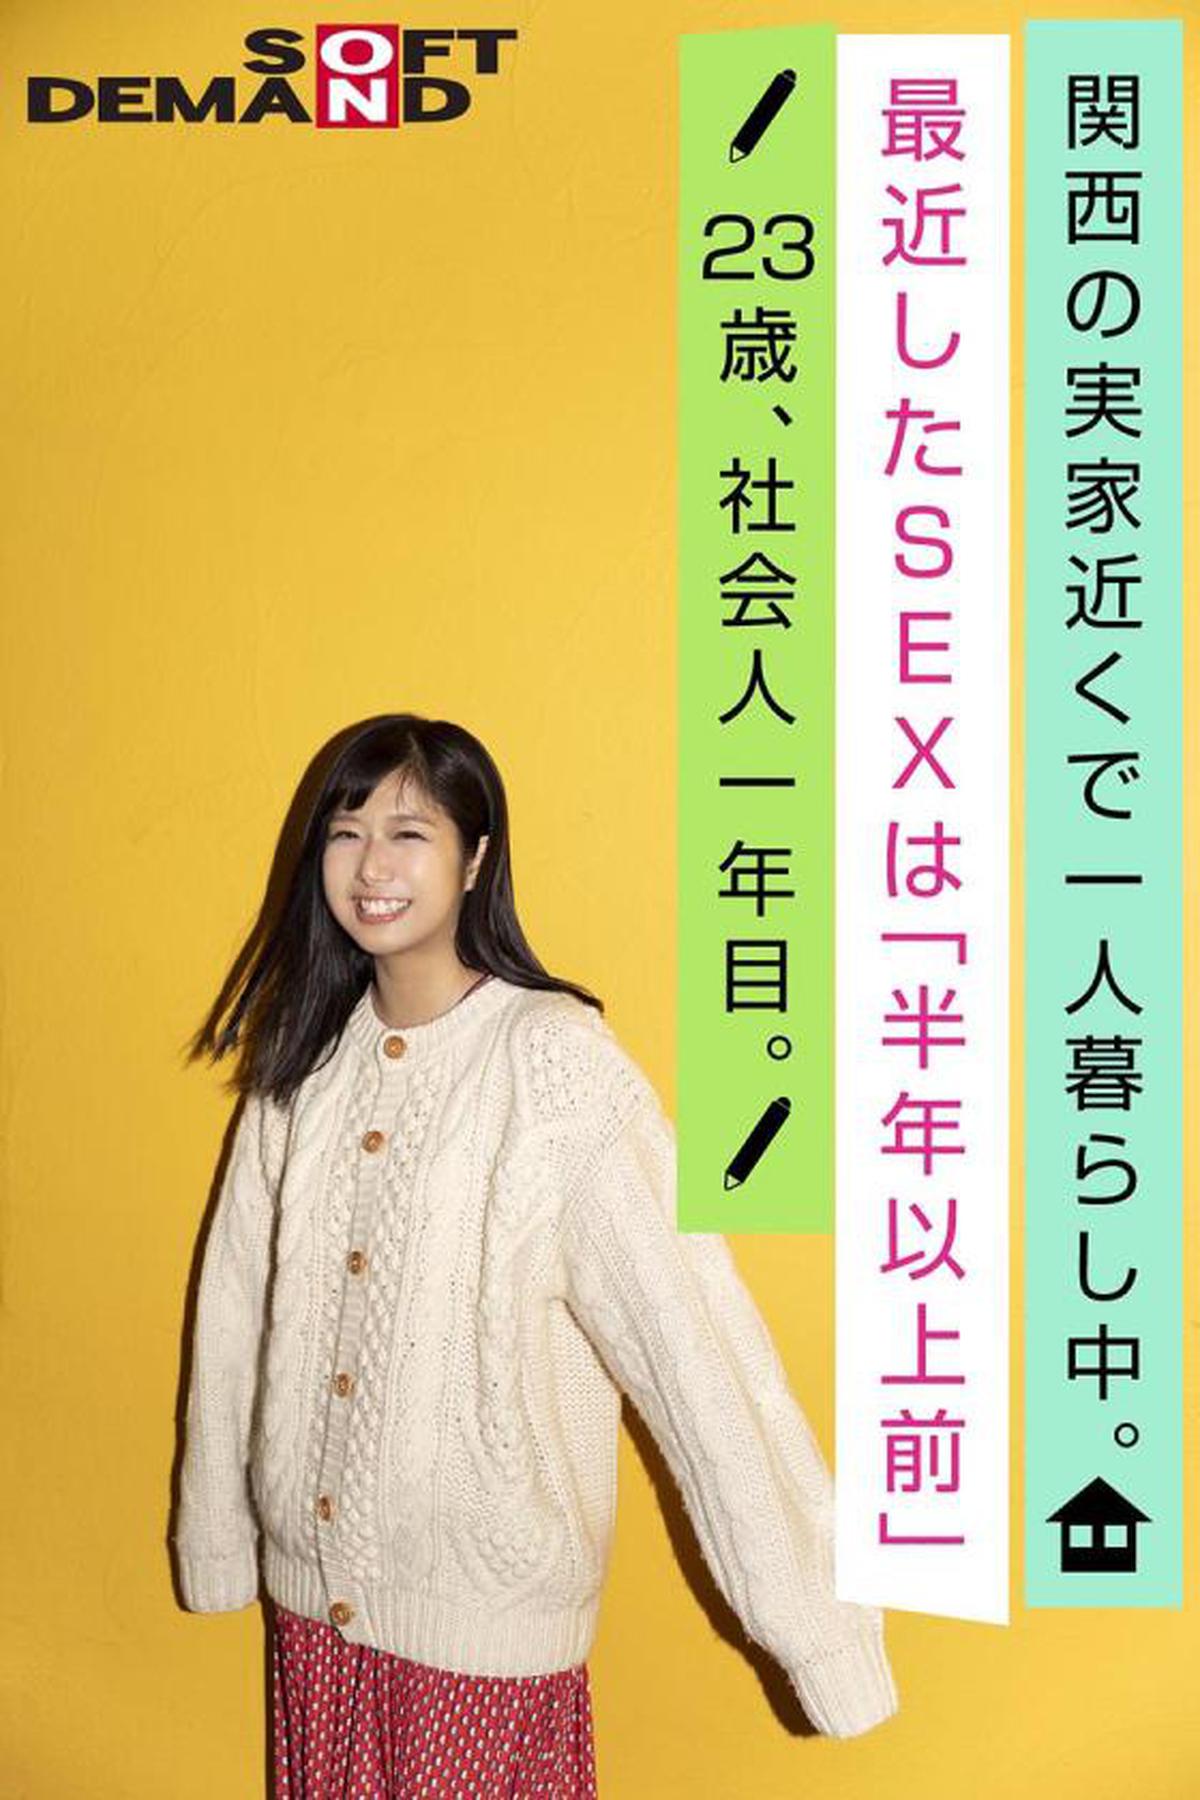 107EMOI-001 Emo Girl / Shy AV Appearance (เปิดตัว) / Emi Suzukaze (23) / ปีแรกของคนทำงาน / ส่วนสูง 157cm / B Cup / ความเขินอายและความเขินอาย